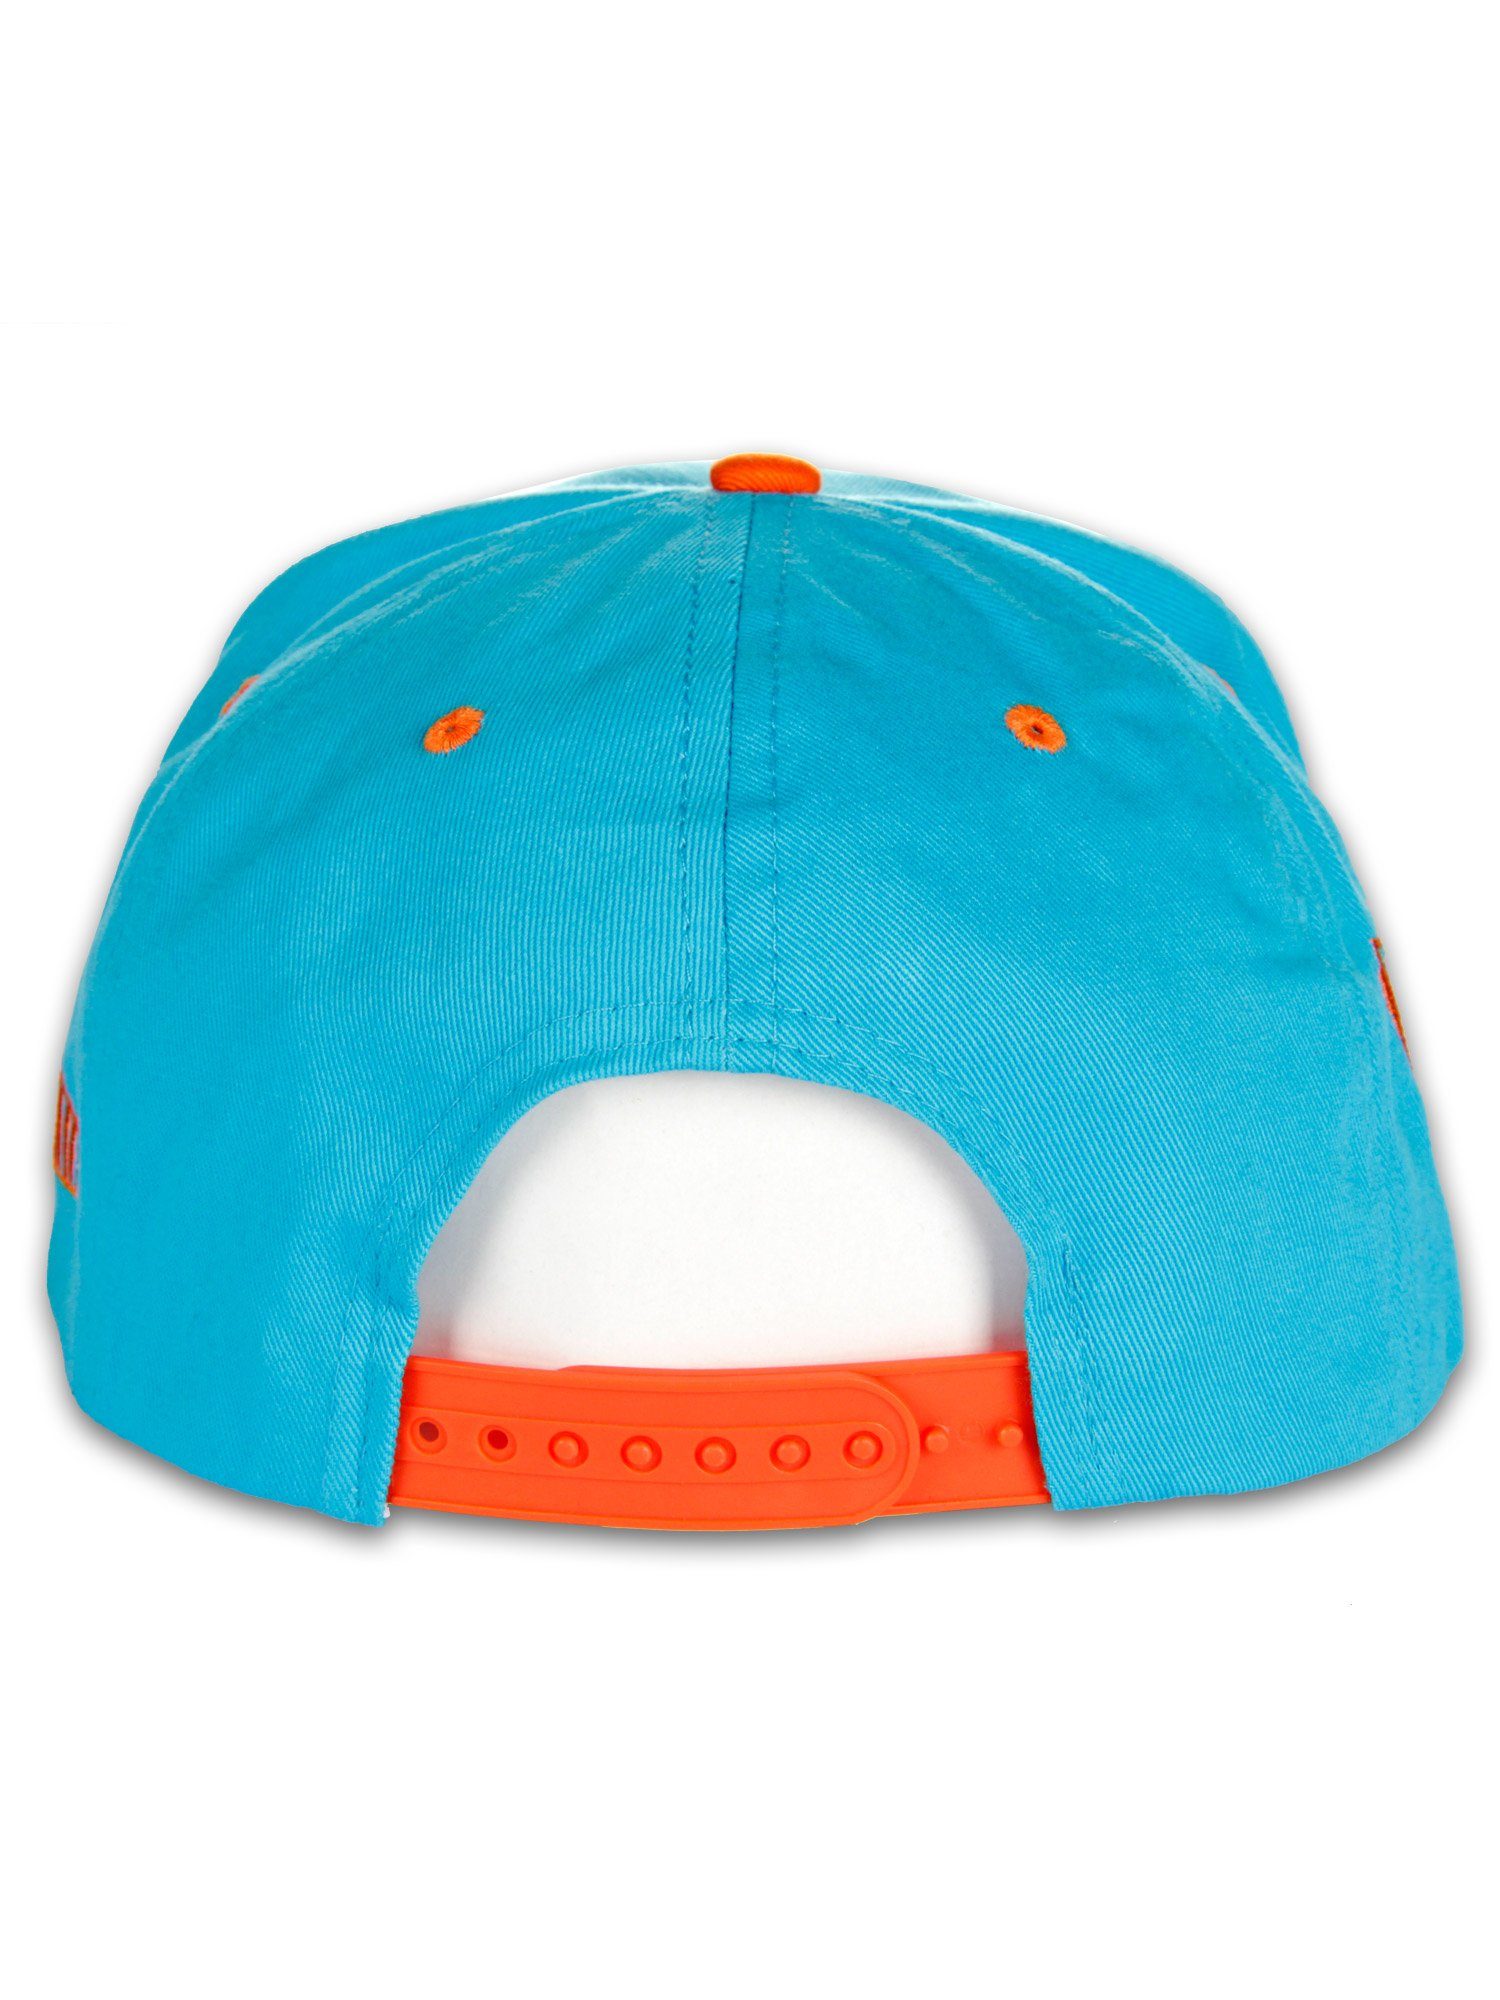 RedBridge Baseball Cap Schirm mit Bootle kontrastfarbigem blau